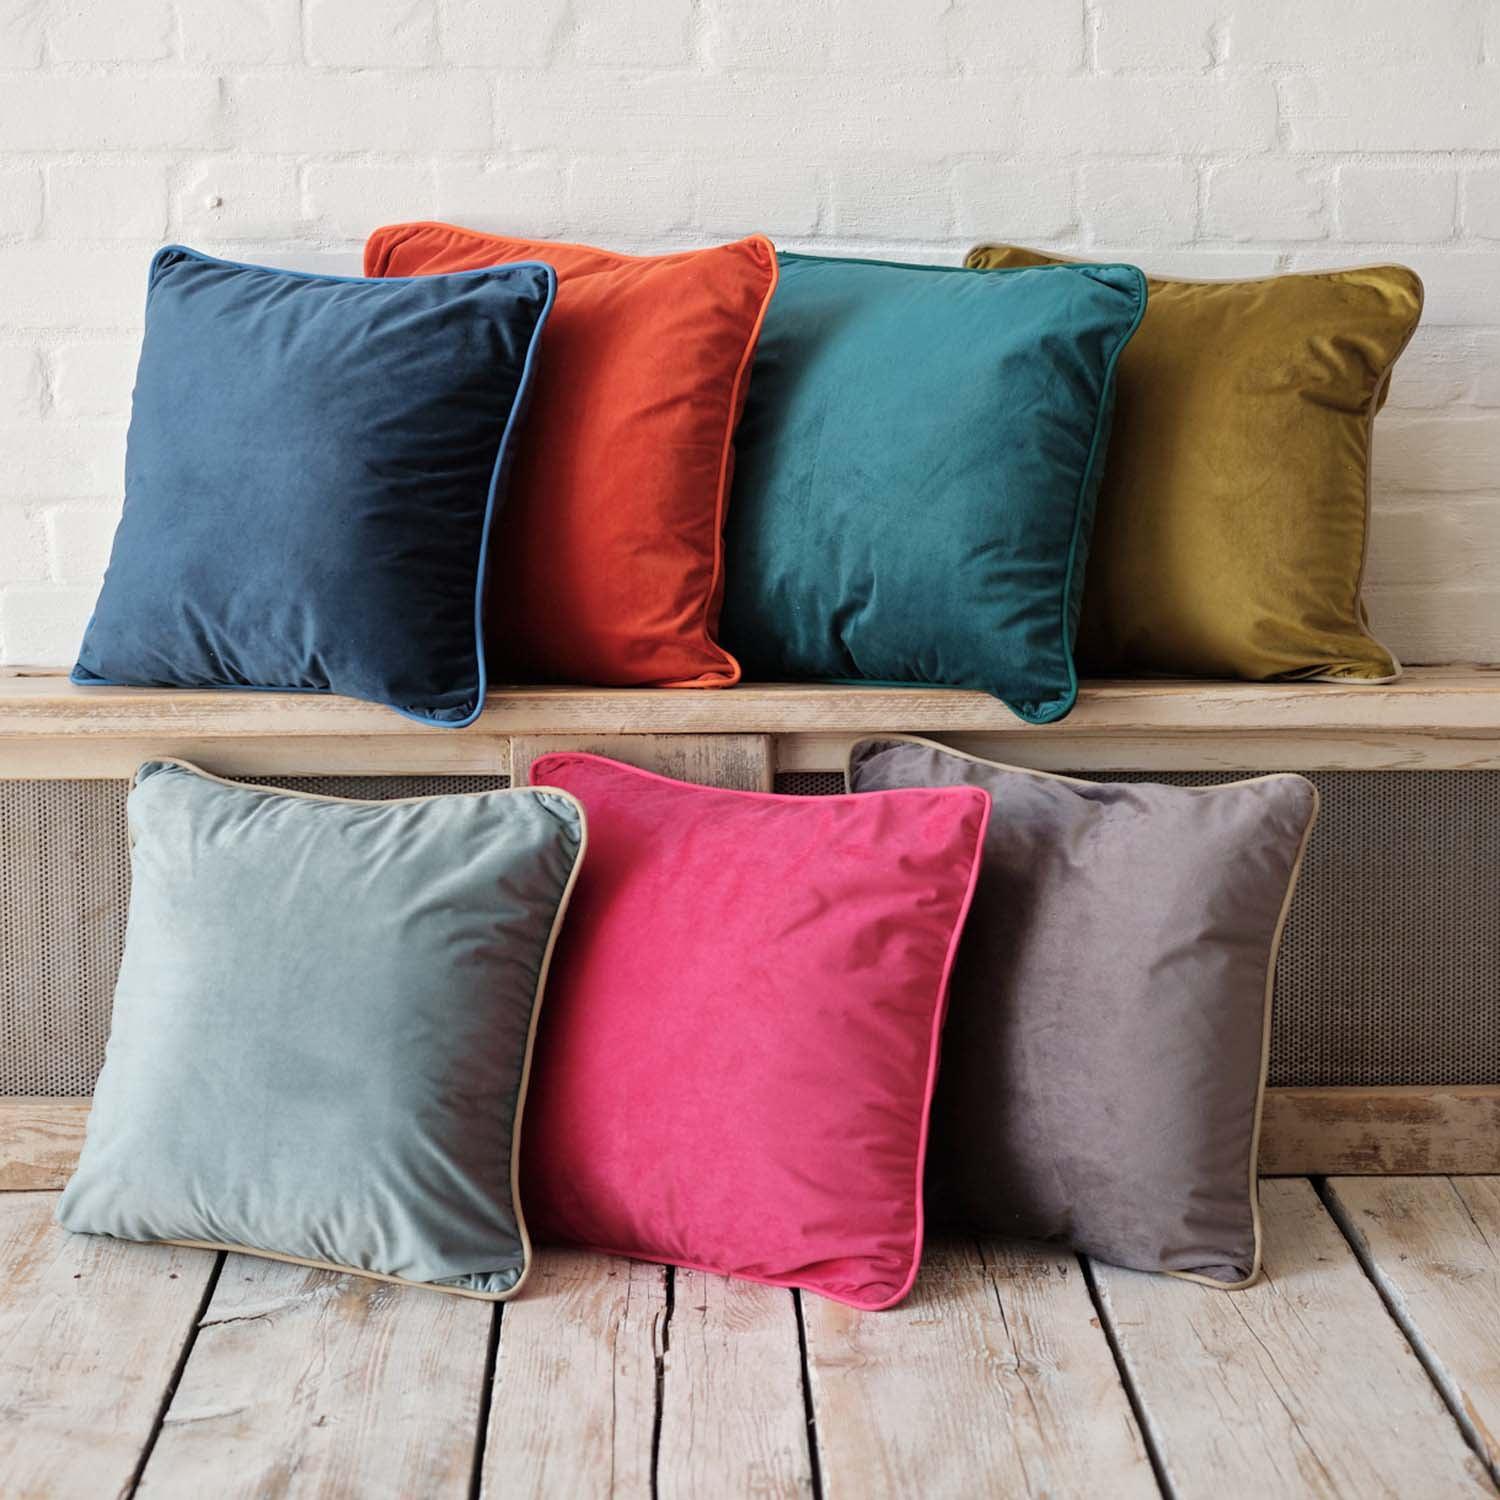 Velvet Velour Cushion Orange Piped - Art Print Cushion - Handmade Cushions UK - WeLoveCushions